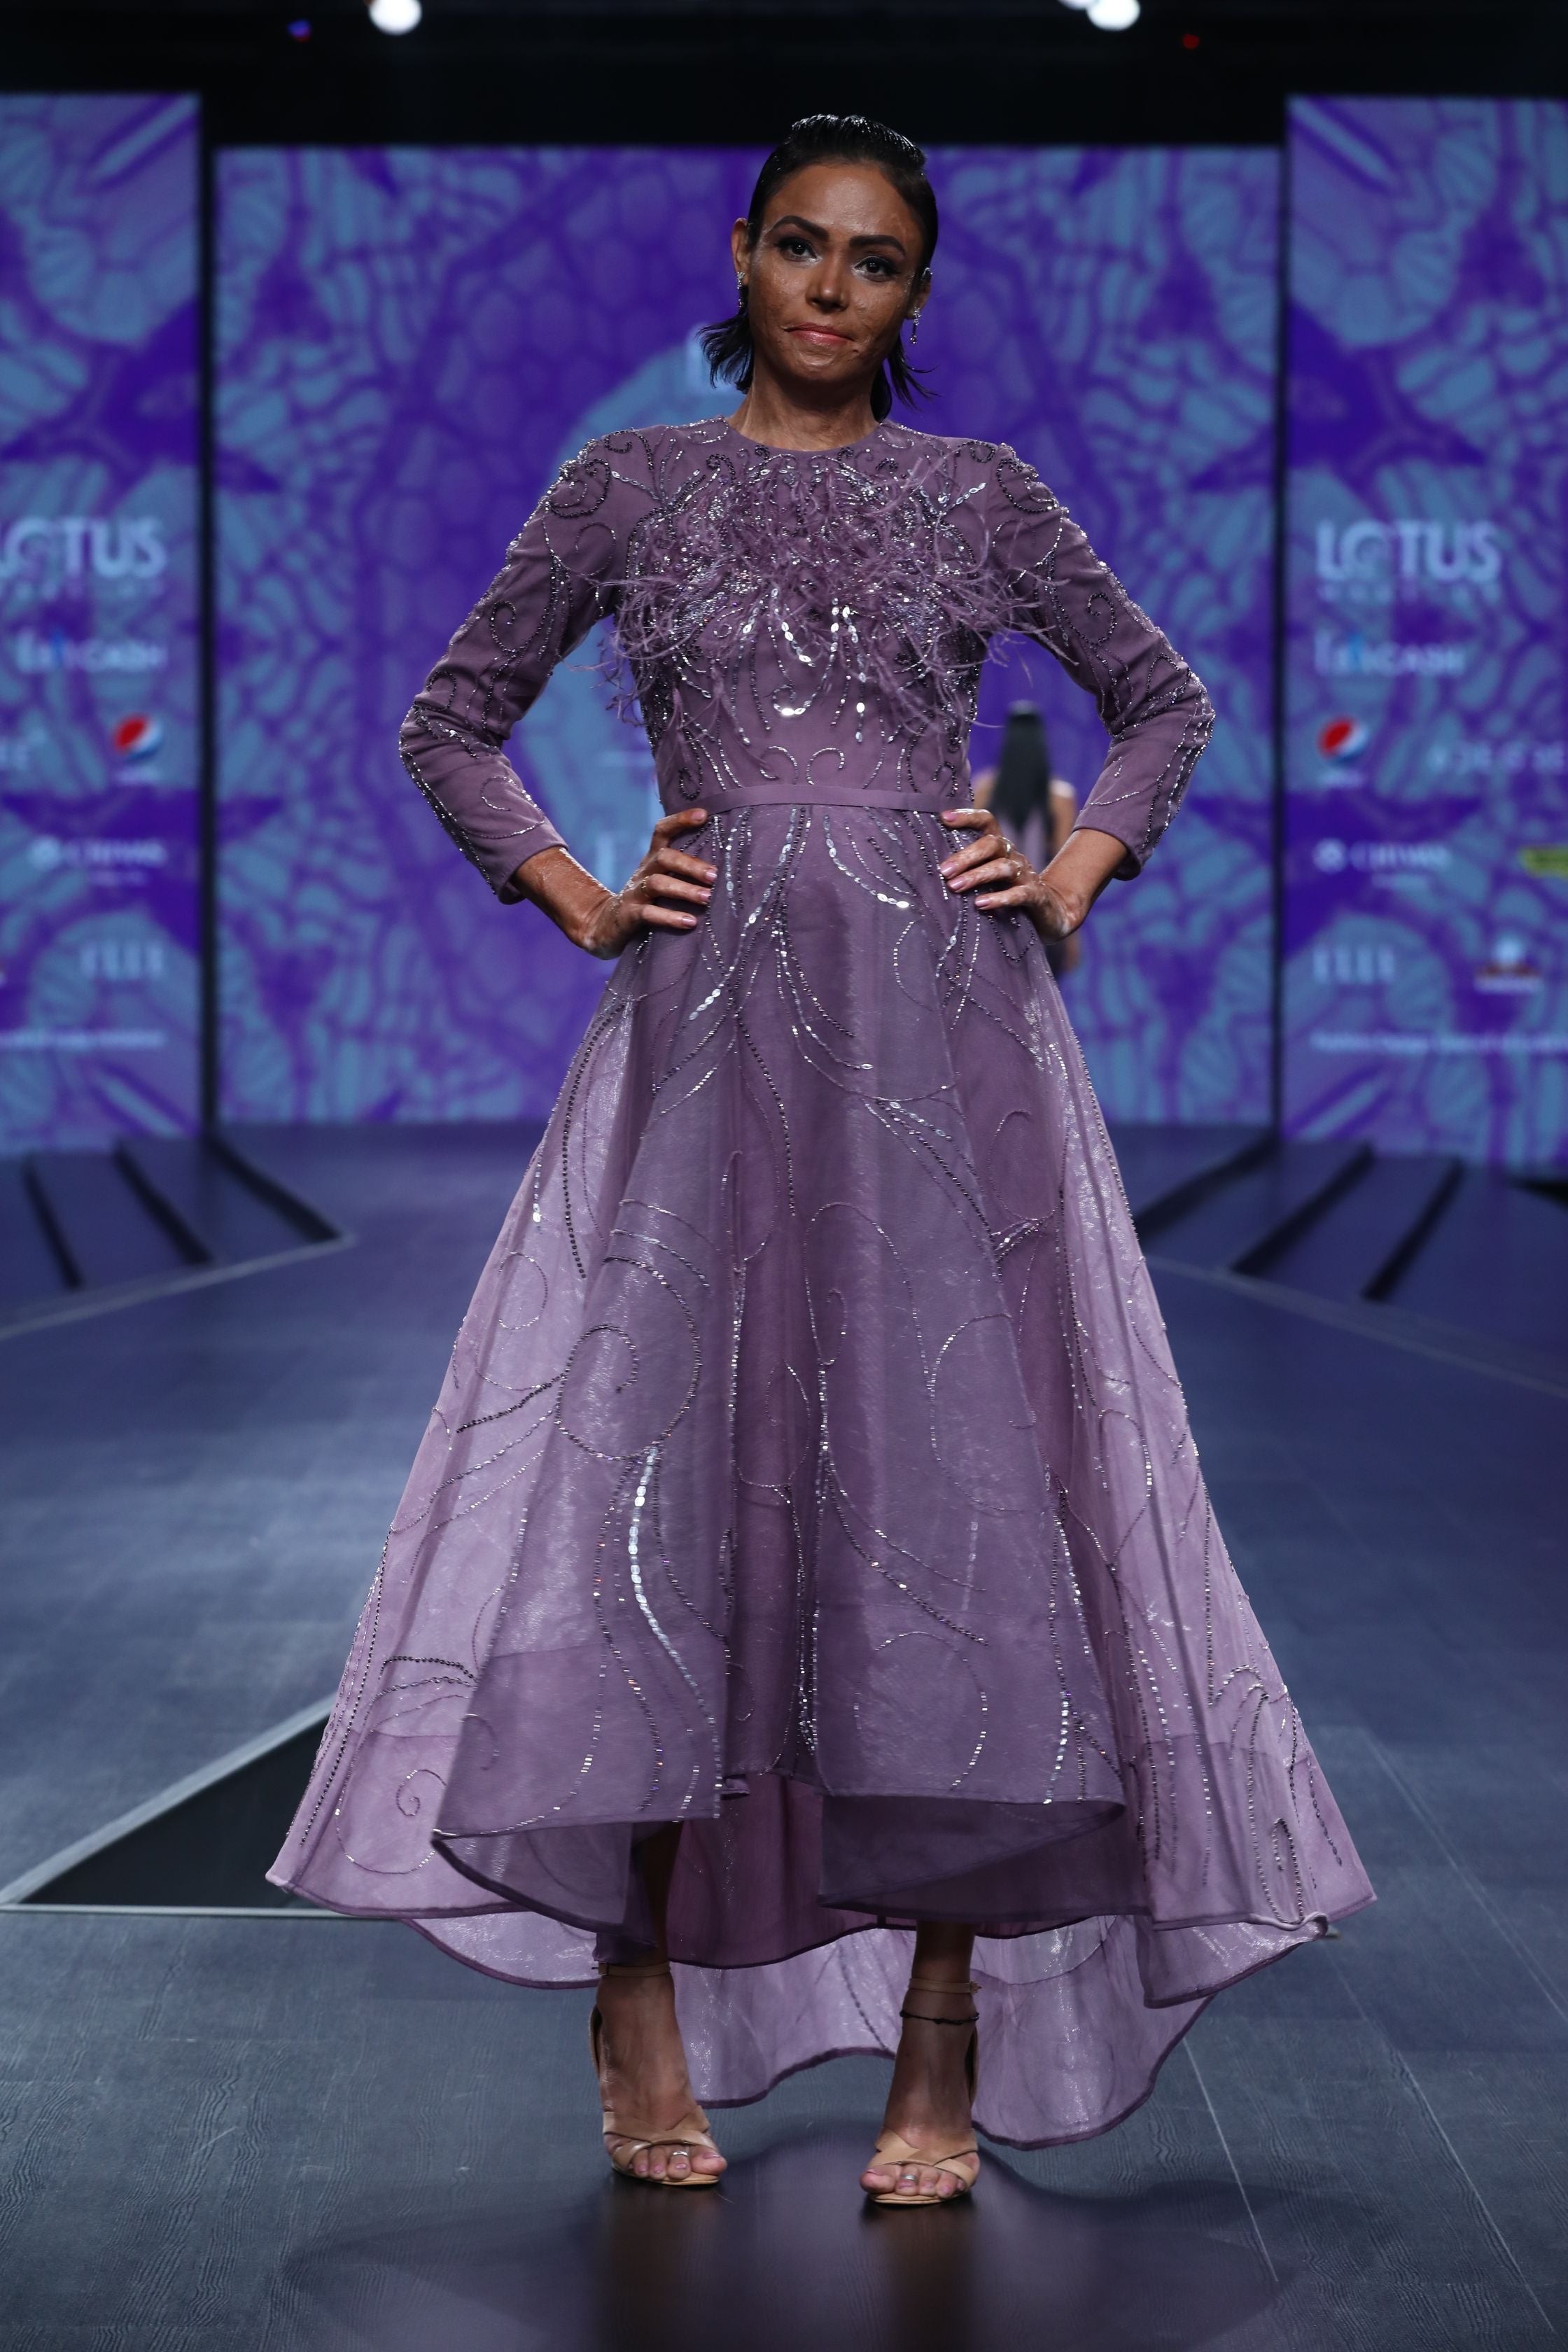 Amit GT - Lavender bird motif dress 